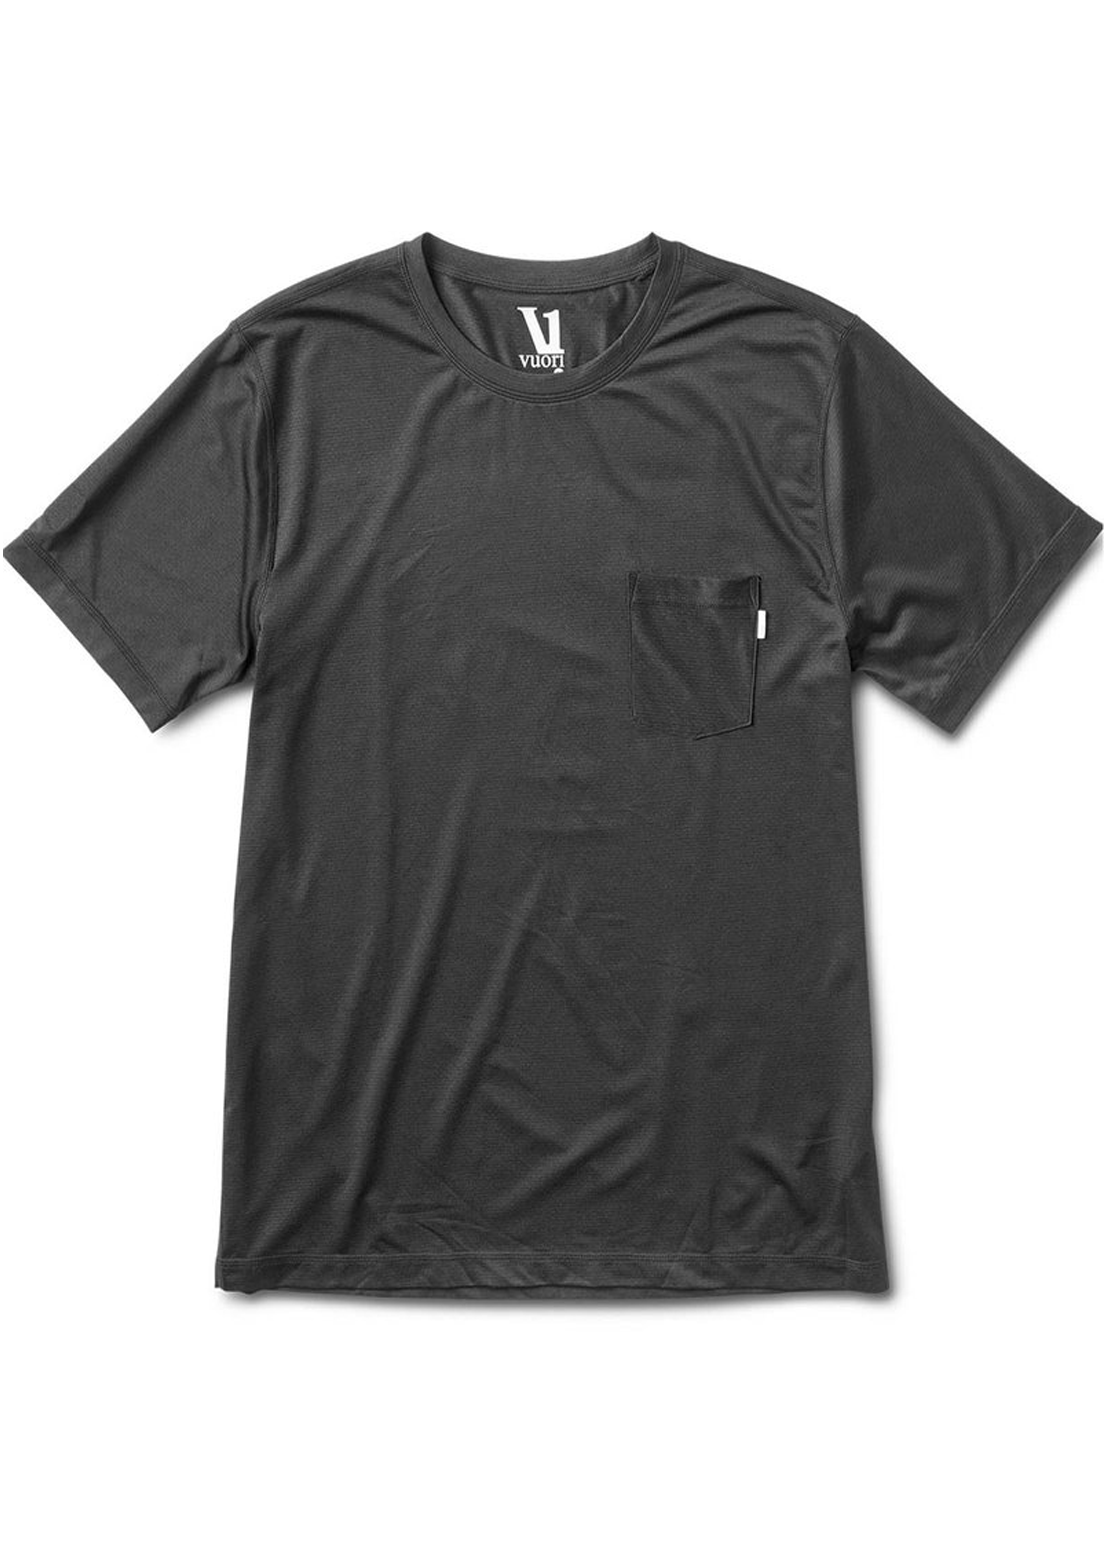 Vuori Men’s Tradewind Performance T-Shirt Black